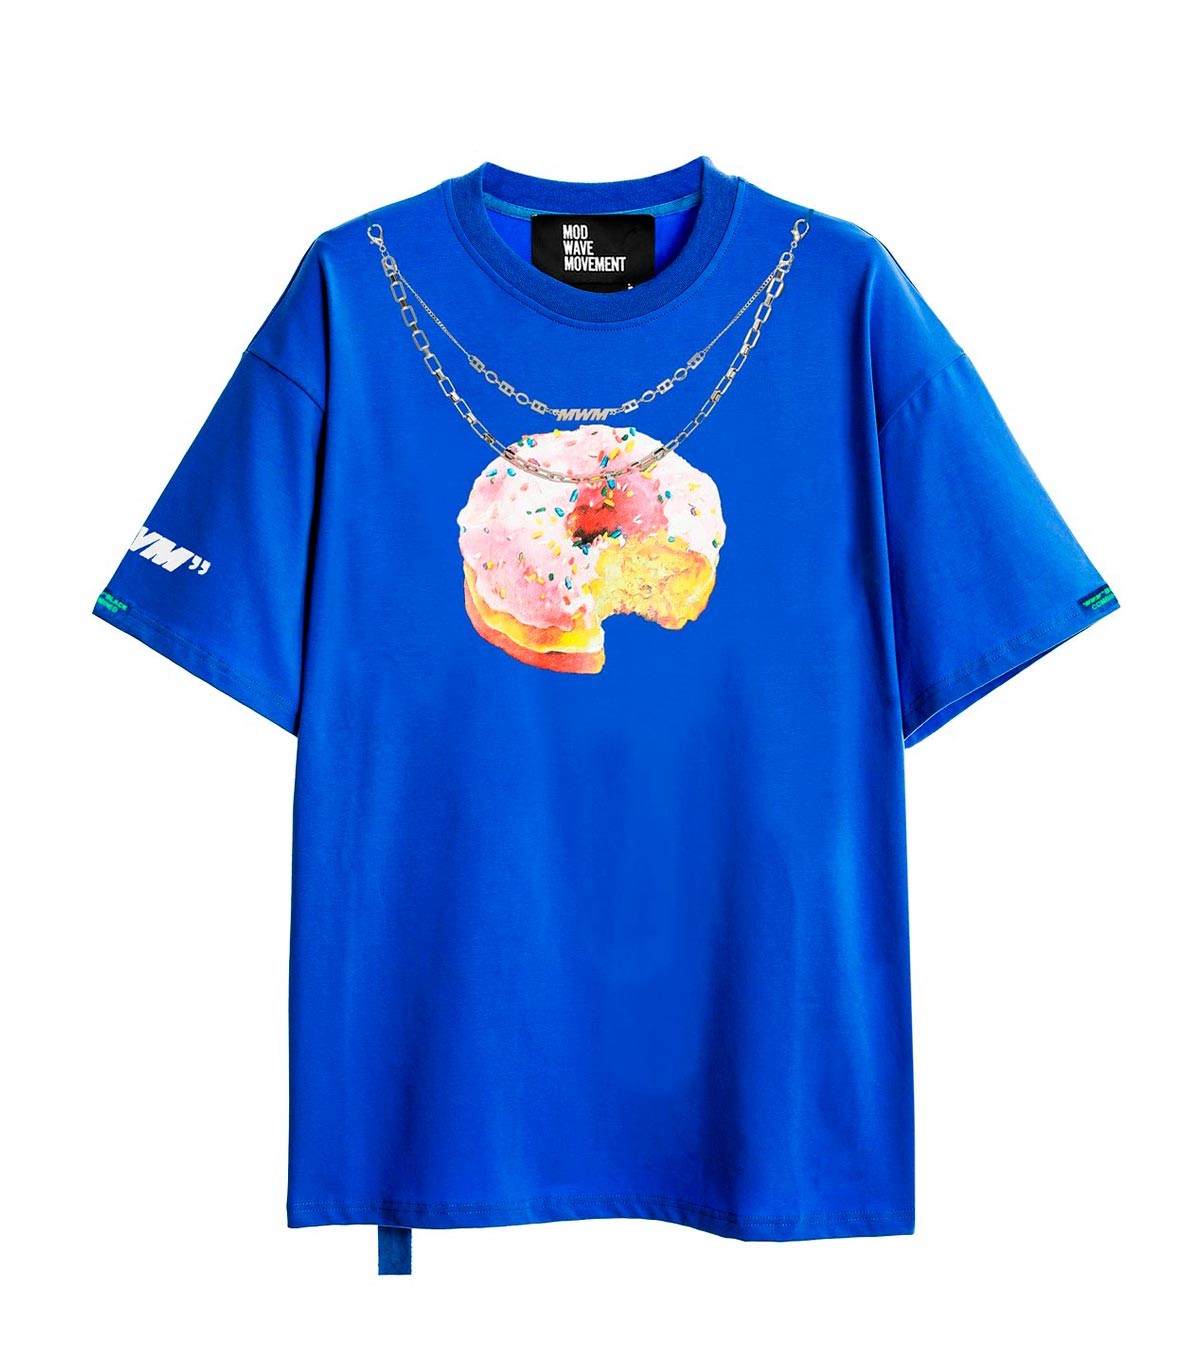 Mod Wave Movement - Camiseta Candy - Azul